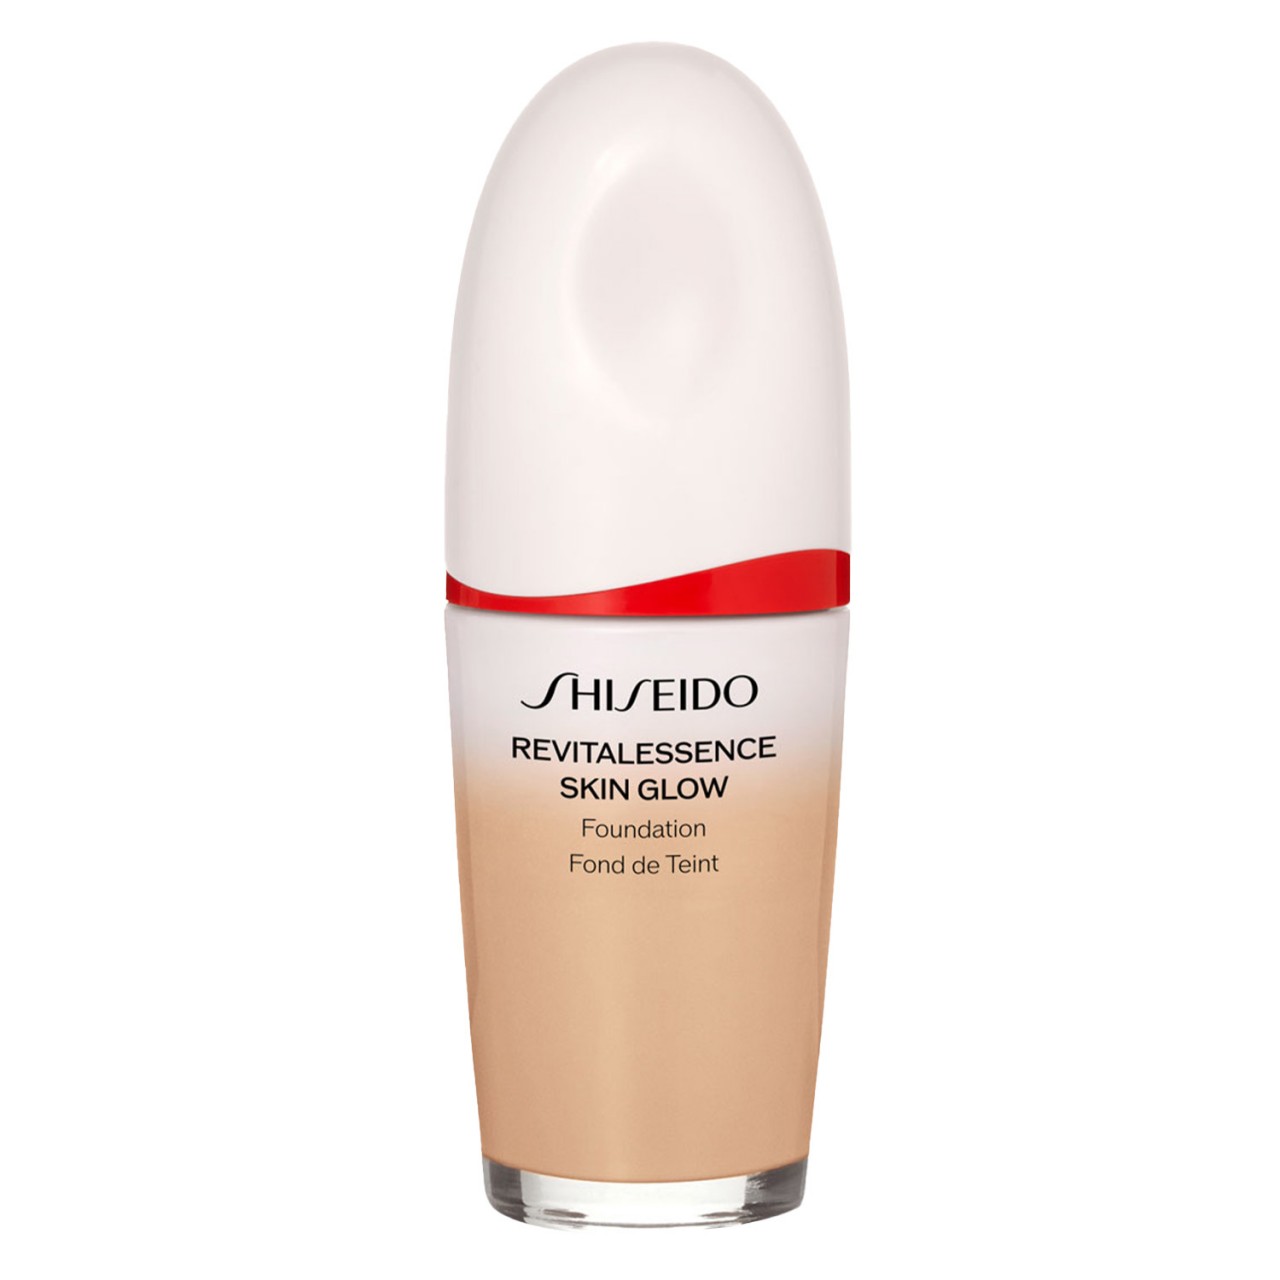 Revitalessence Skin Glow - Foundation Quartz 240 von Shiseido